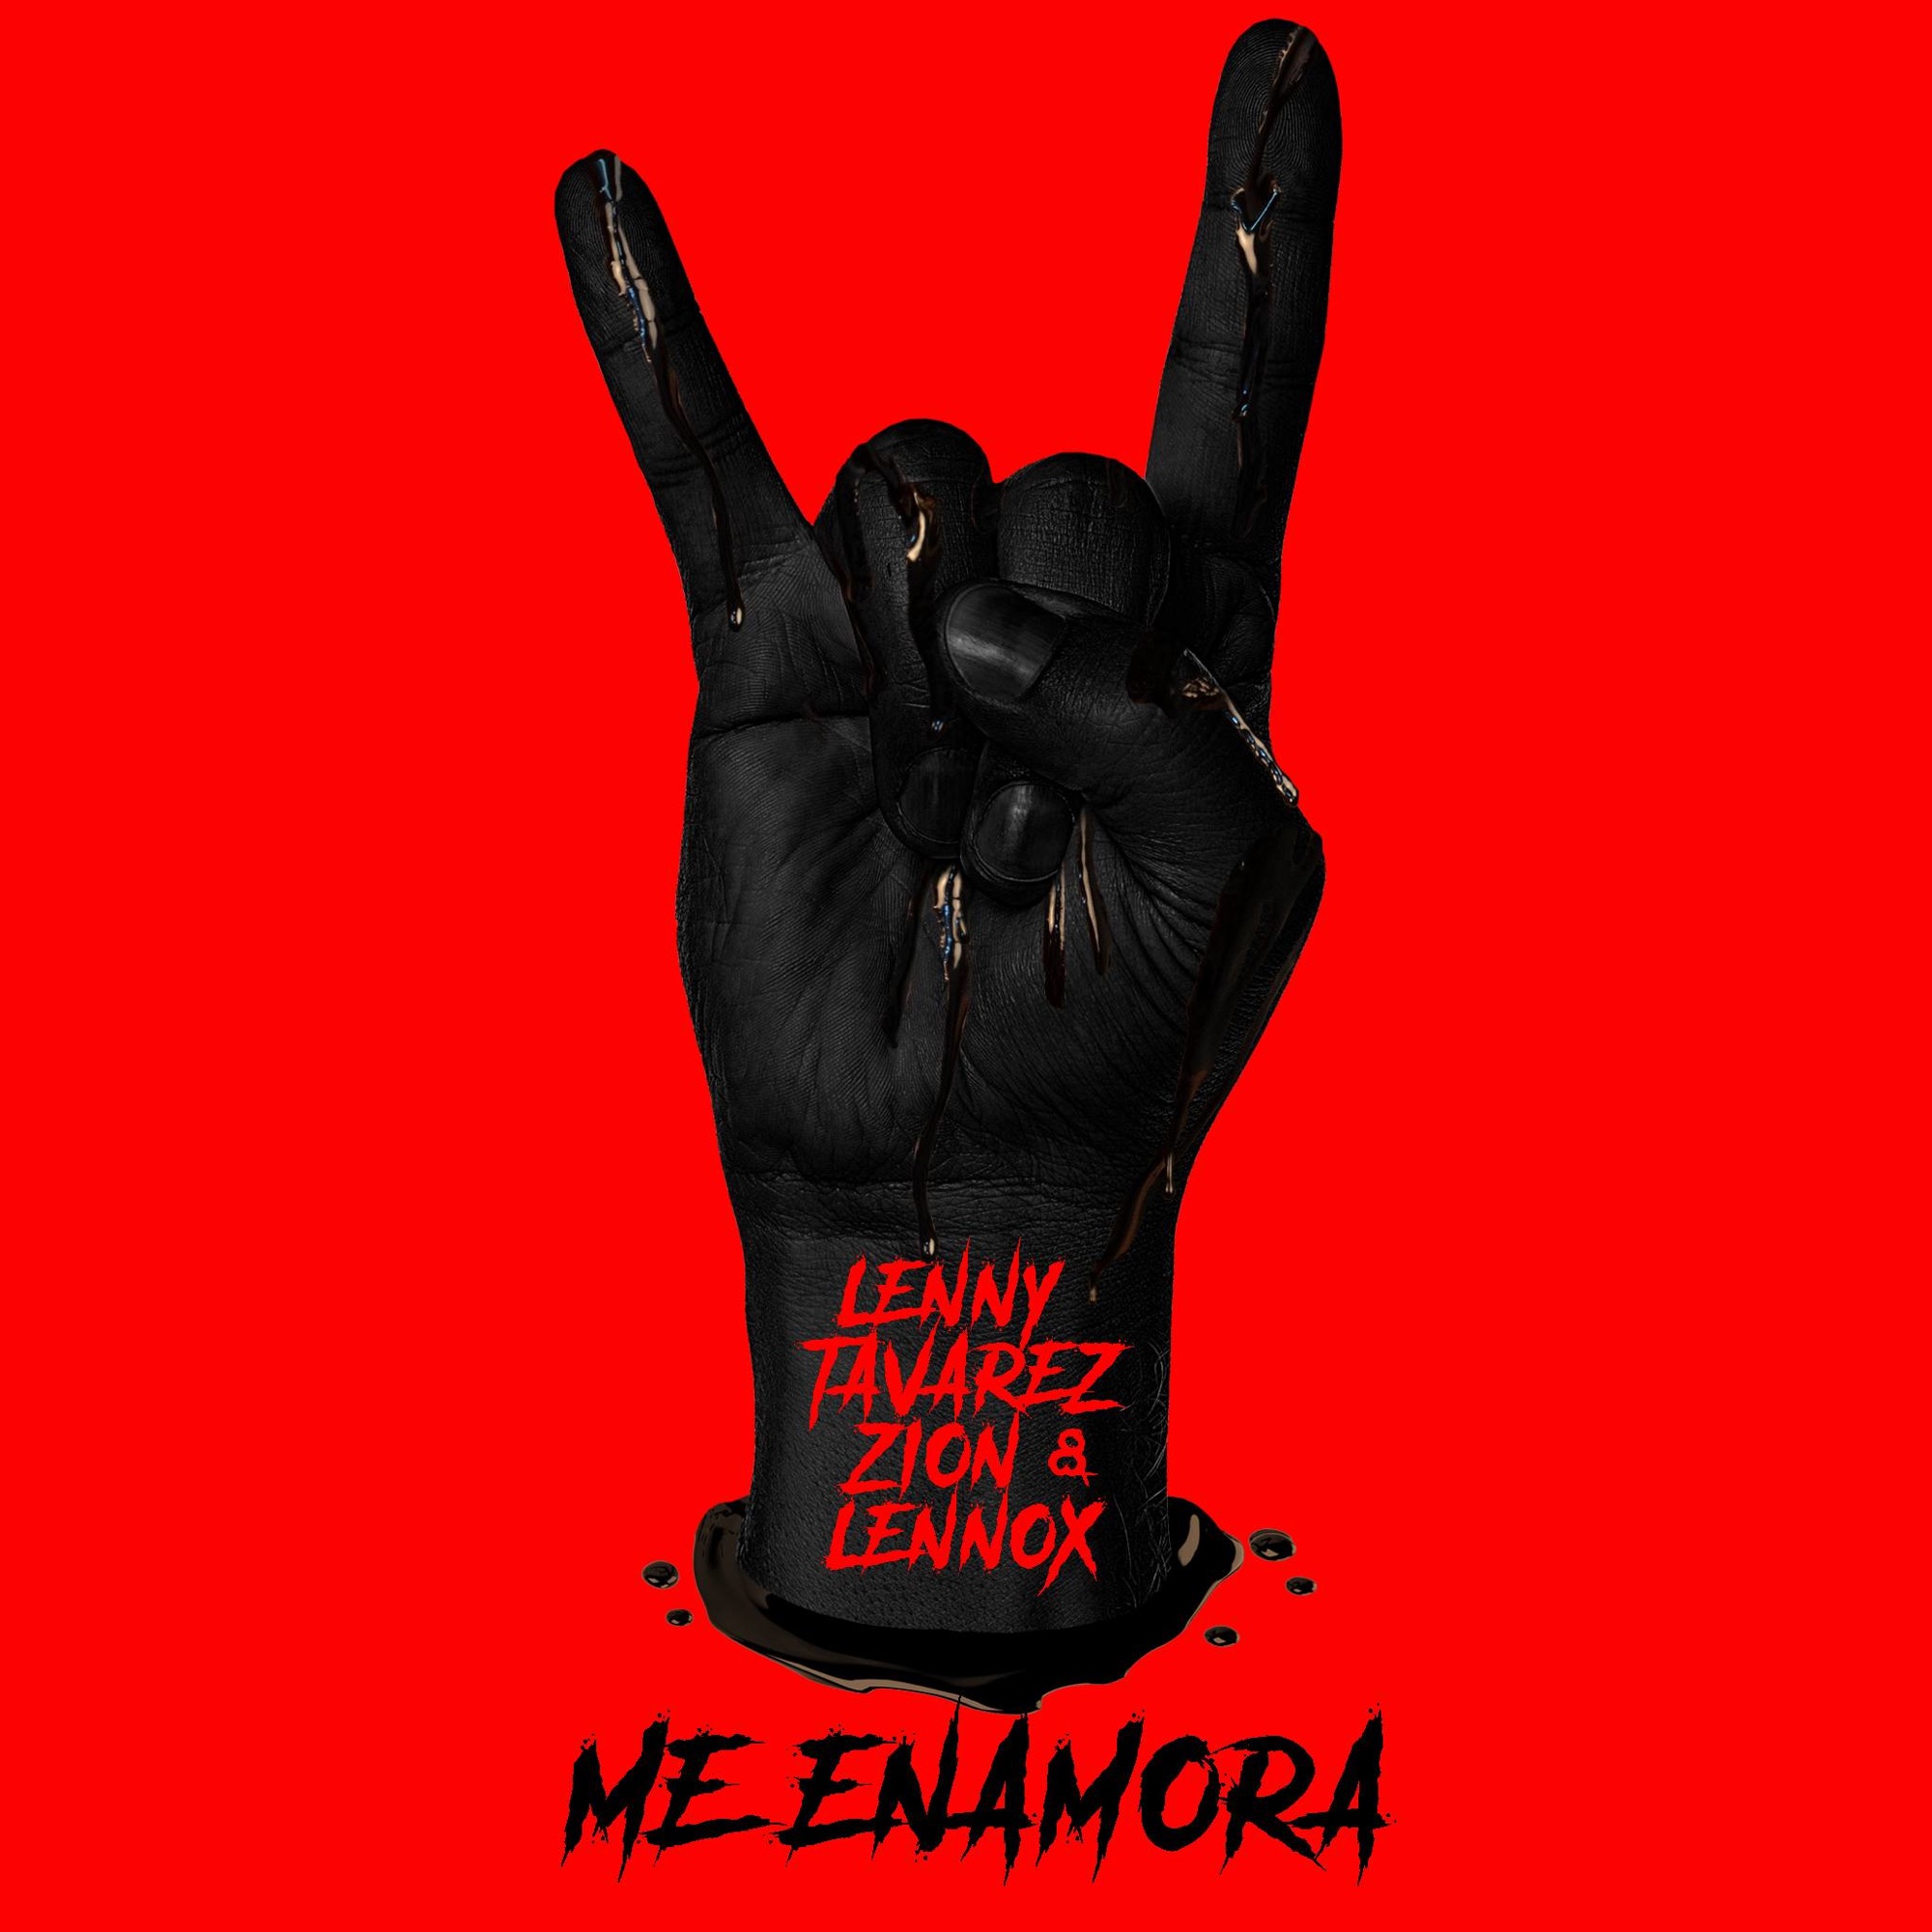 Lenny Tavarez Ft. Zion y Lennox - Me Enamora.mp3